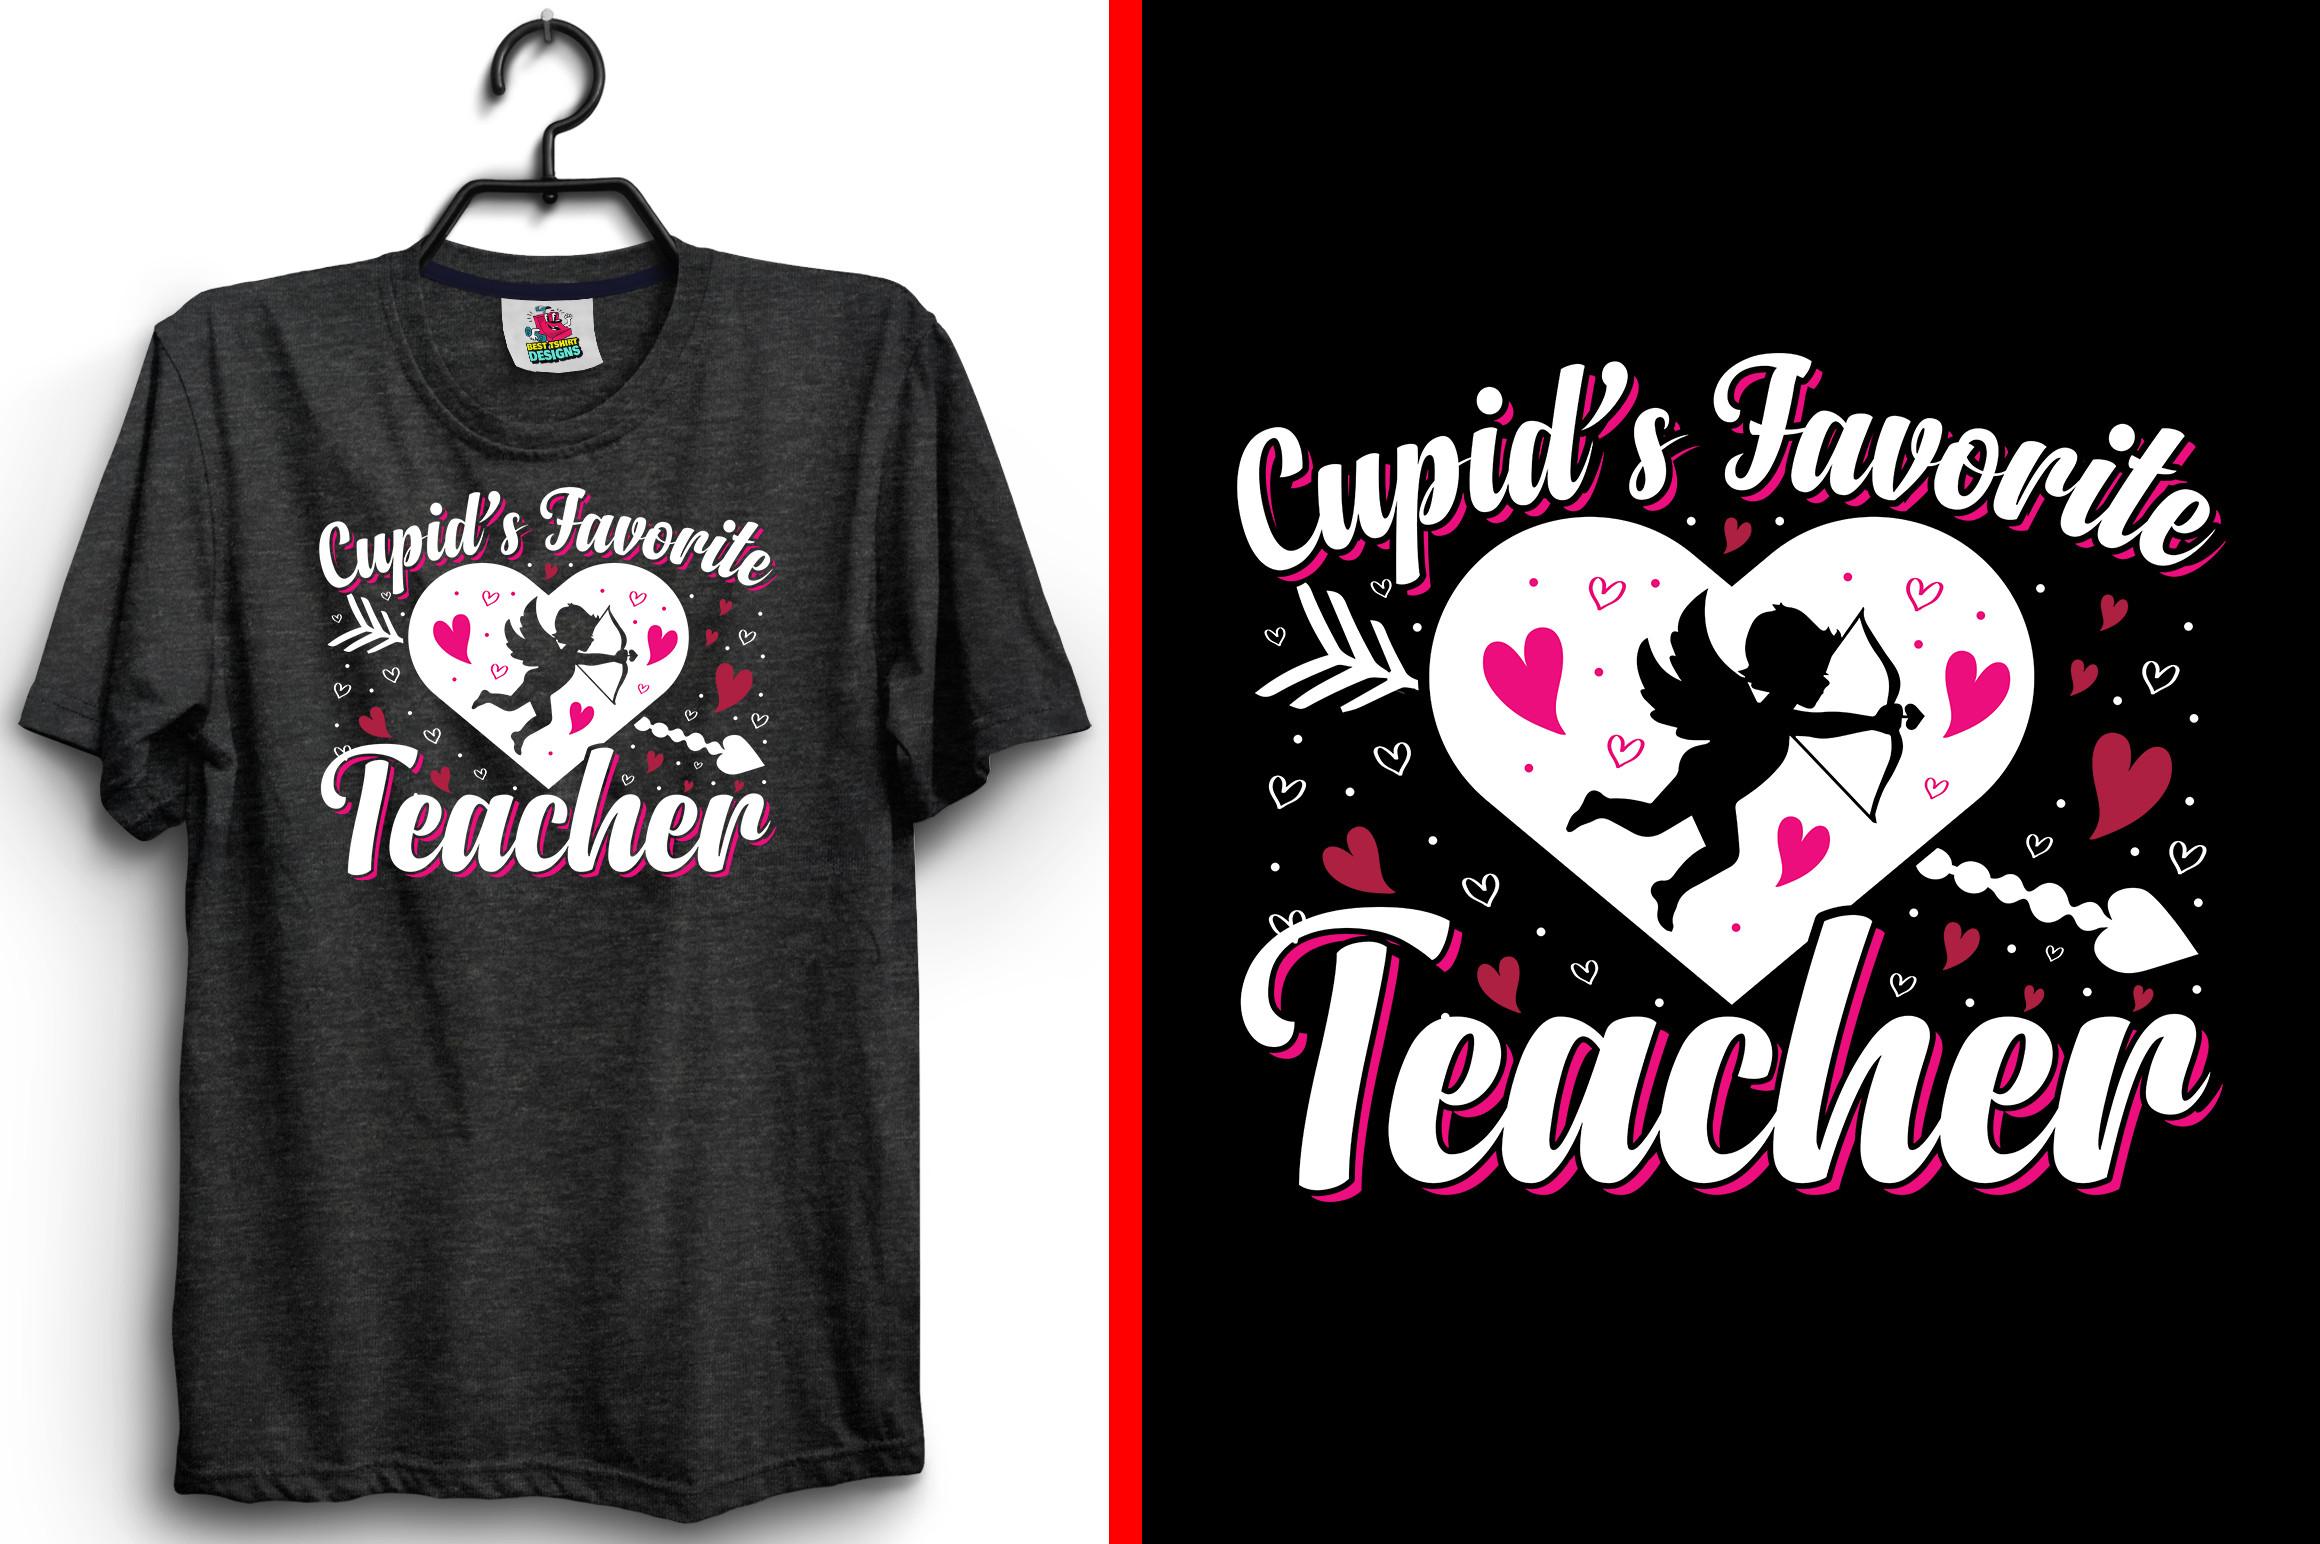 Cupid's Favorite Valentine's Day T-Shirt